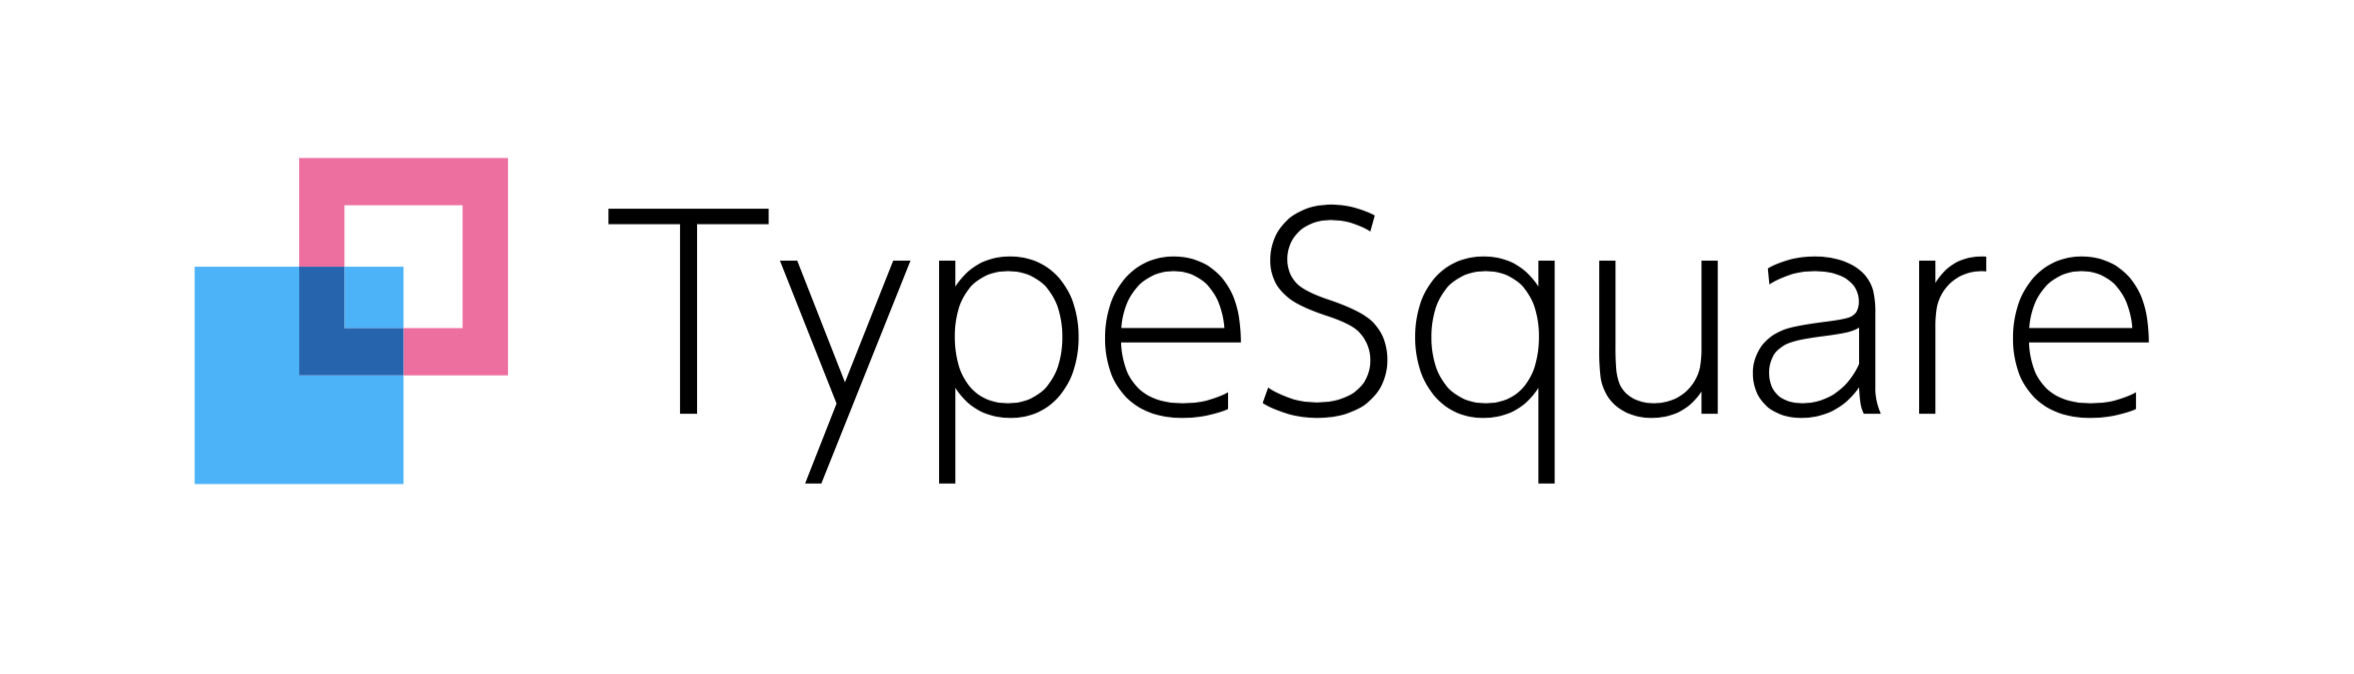 typesquare logo